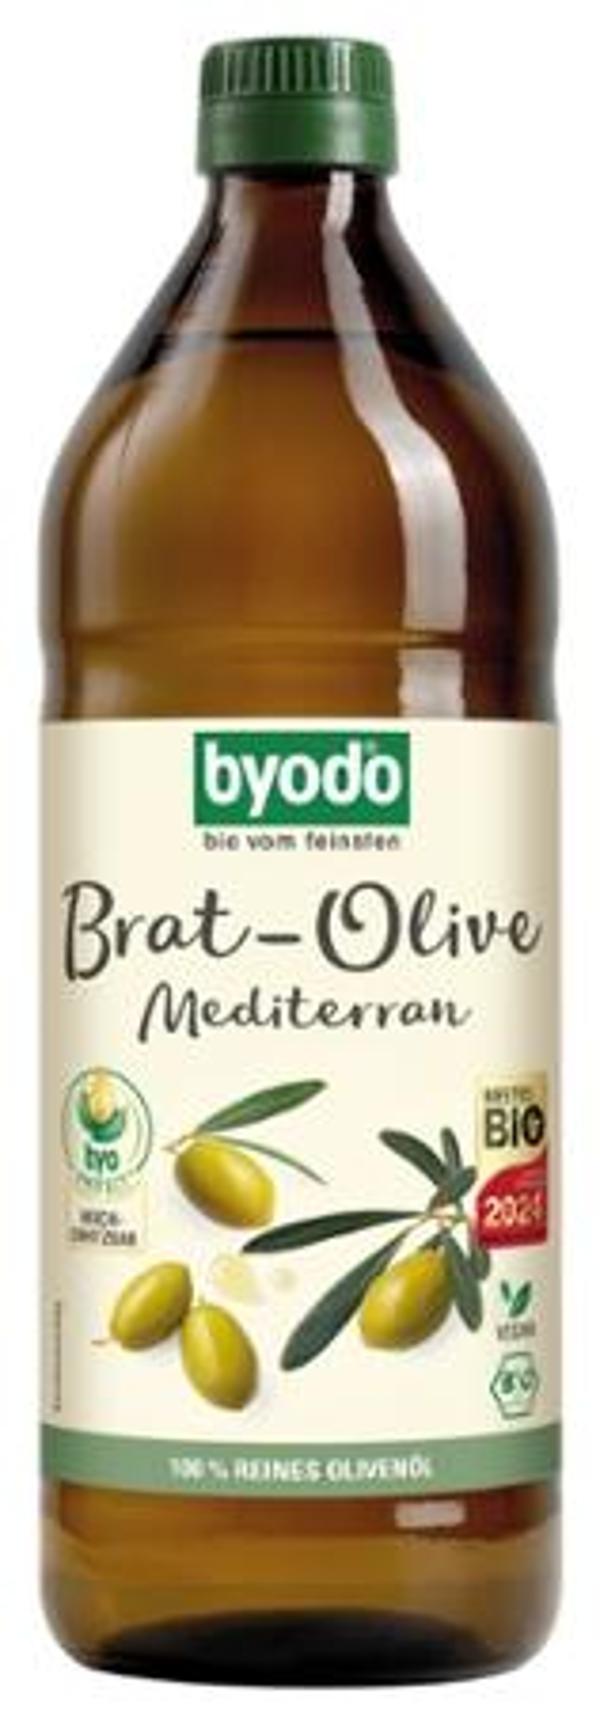 Produktfoto zu Brat Olive mediterran von Byodo